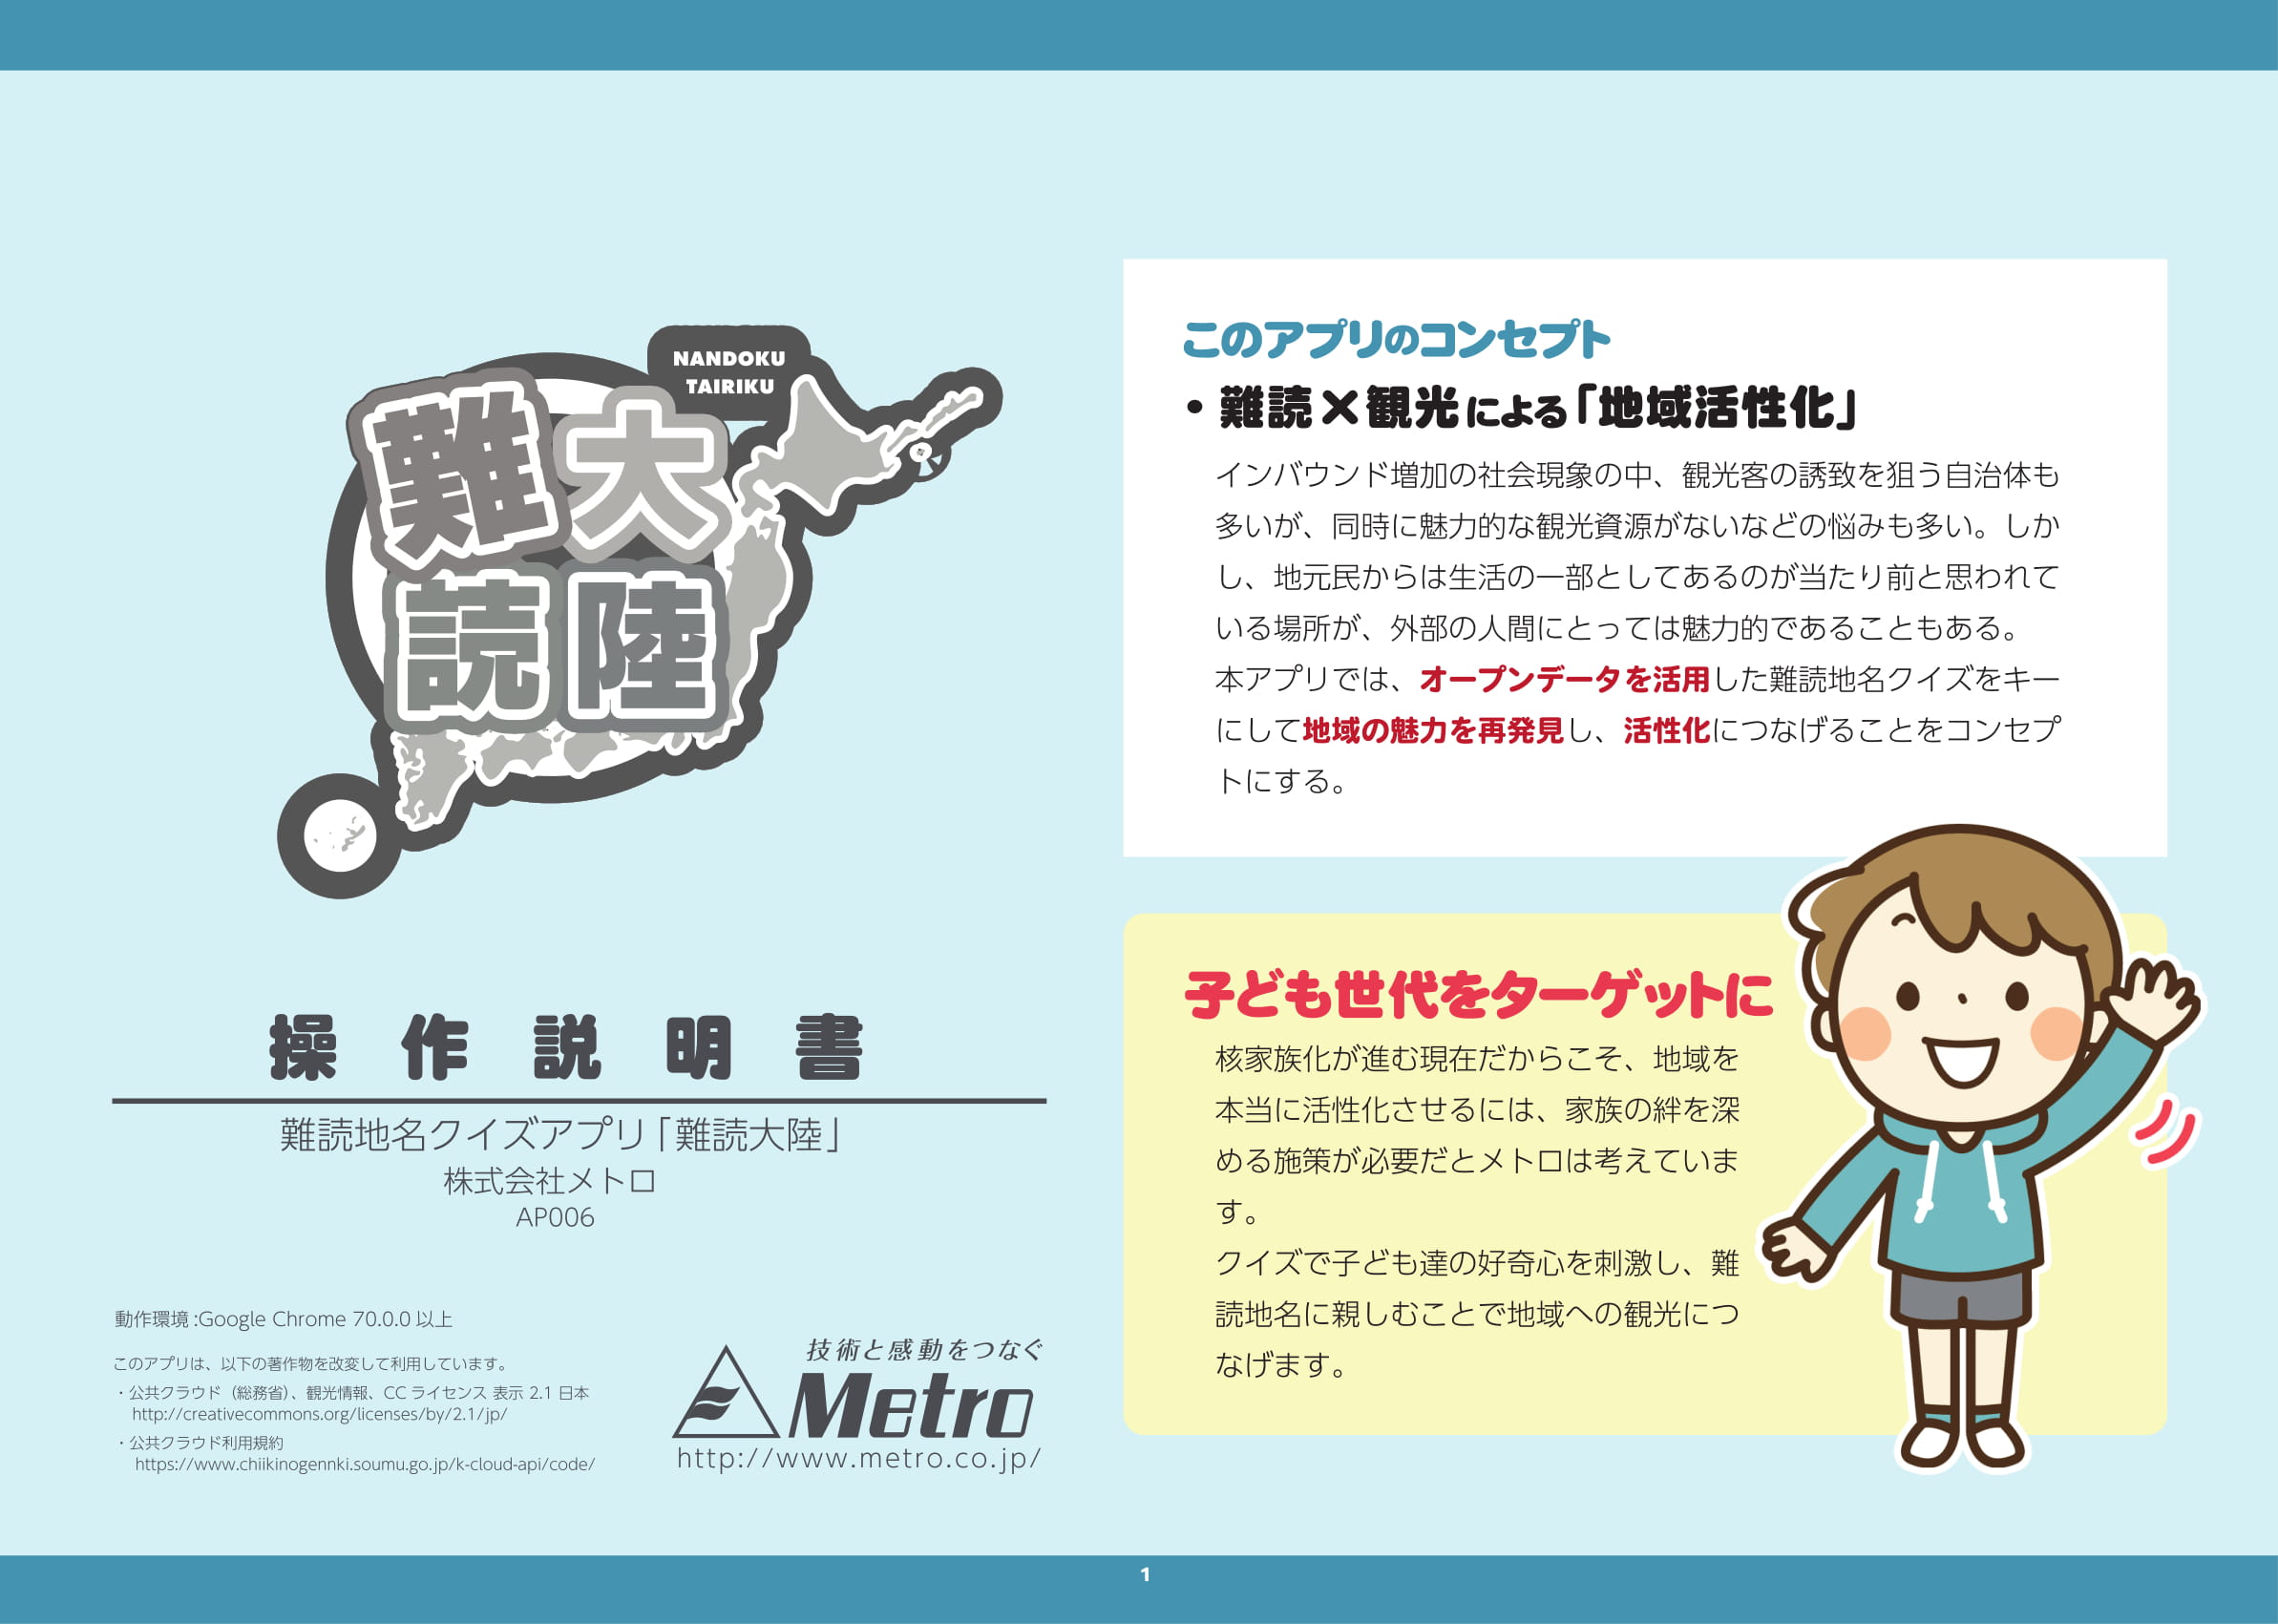 http://www.metro.co.jp/news/images/nandoku1.jpg